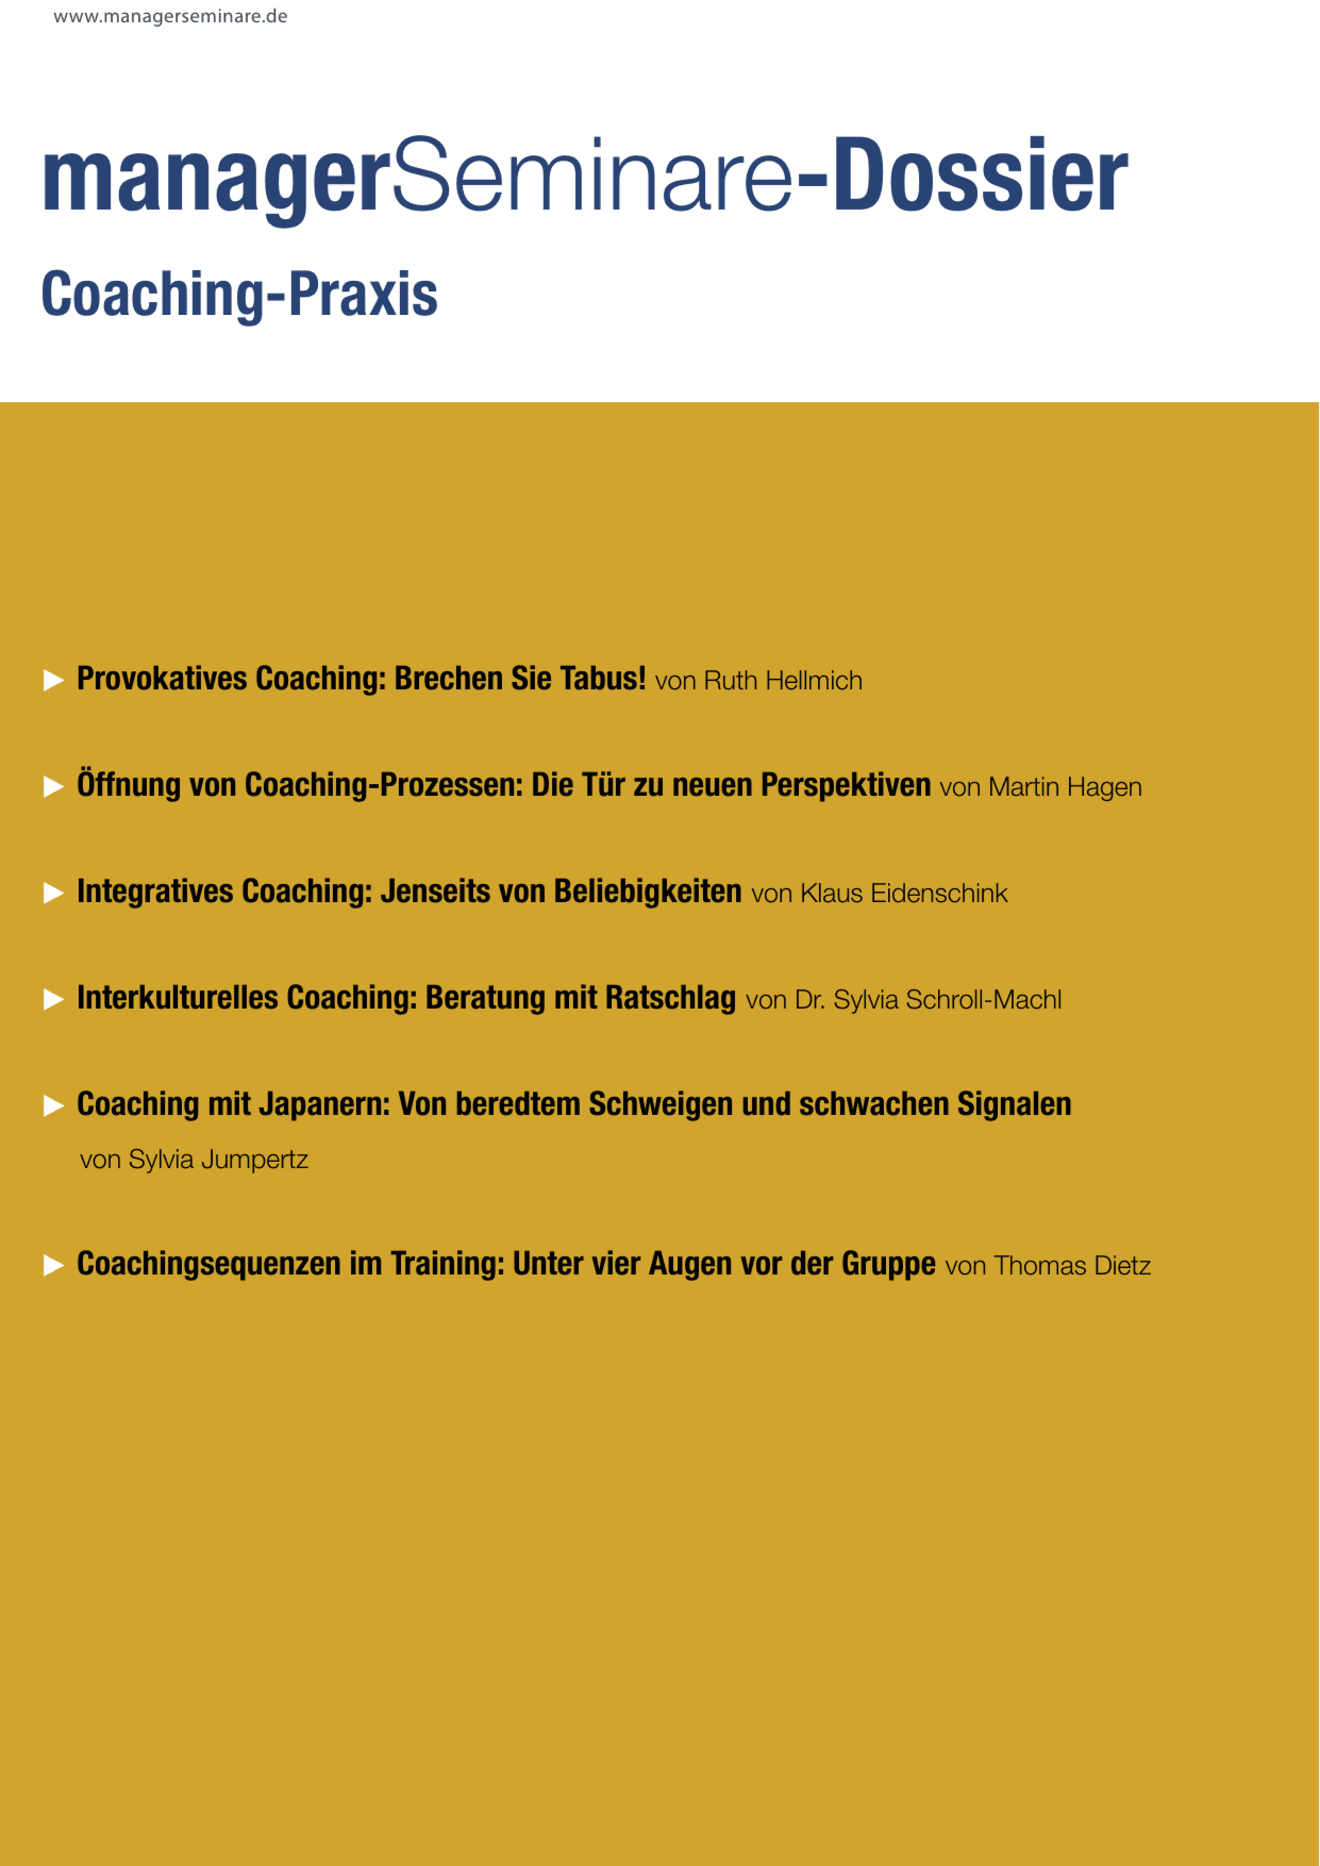 zum Dossier: Coaching-Praxis